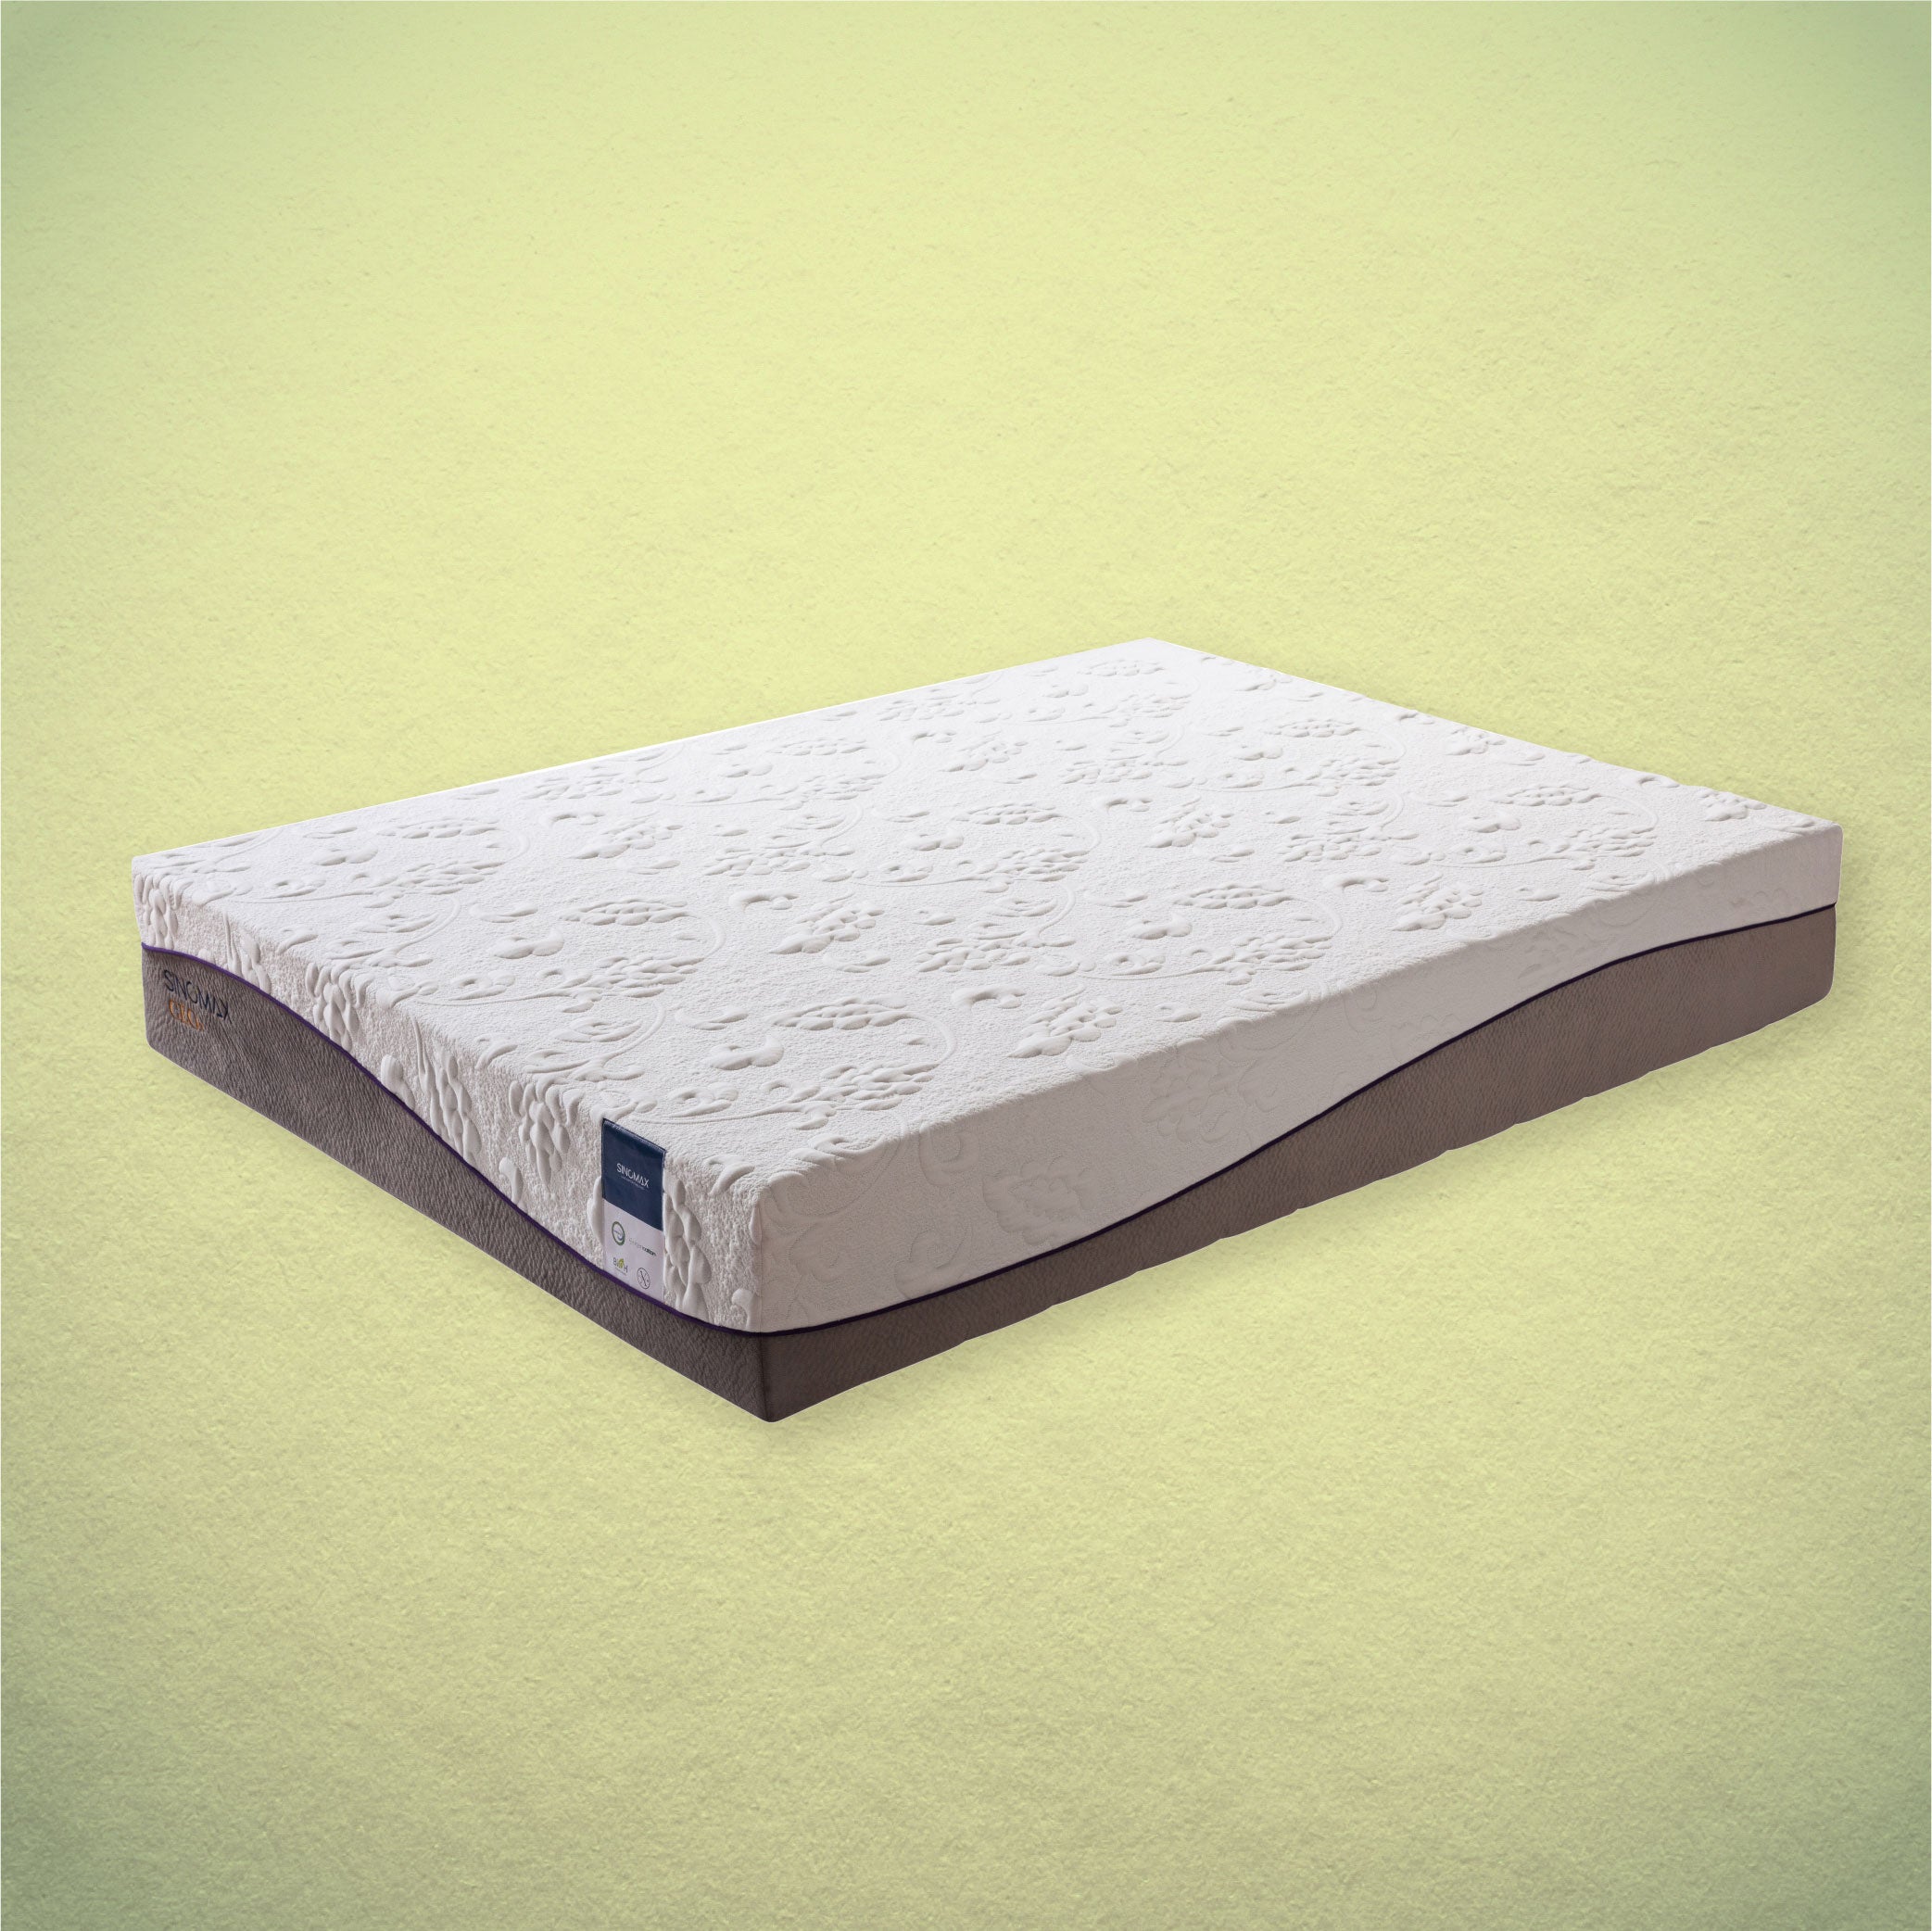 CEOx ULTRA mattress